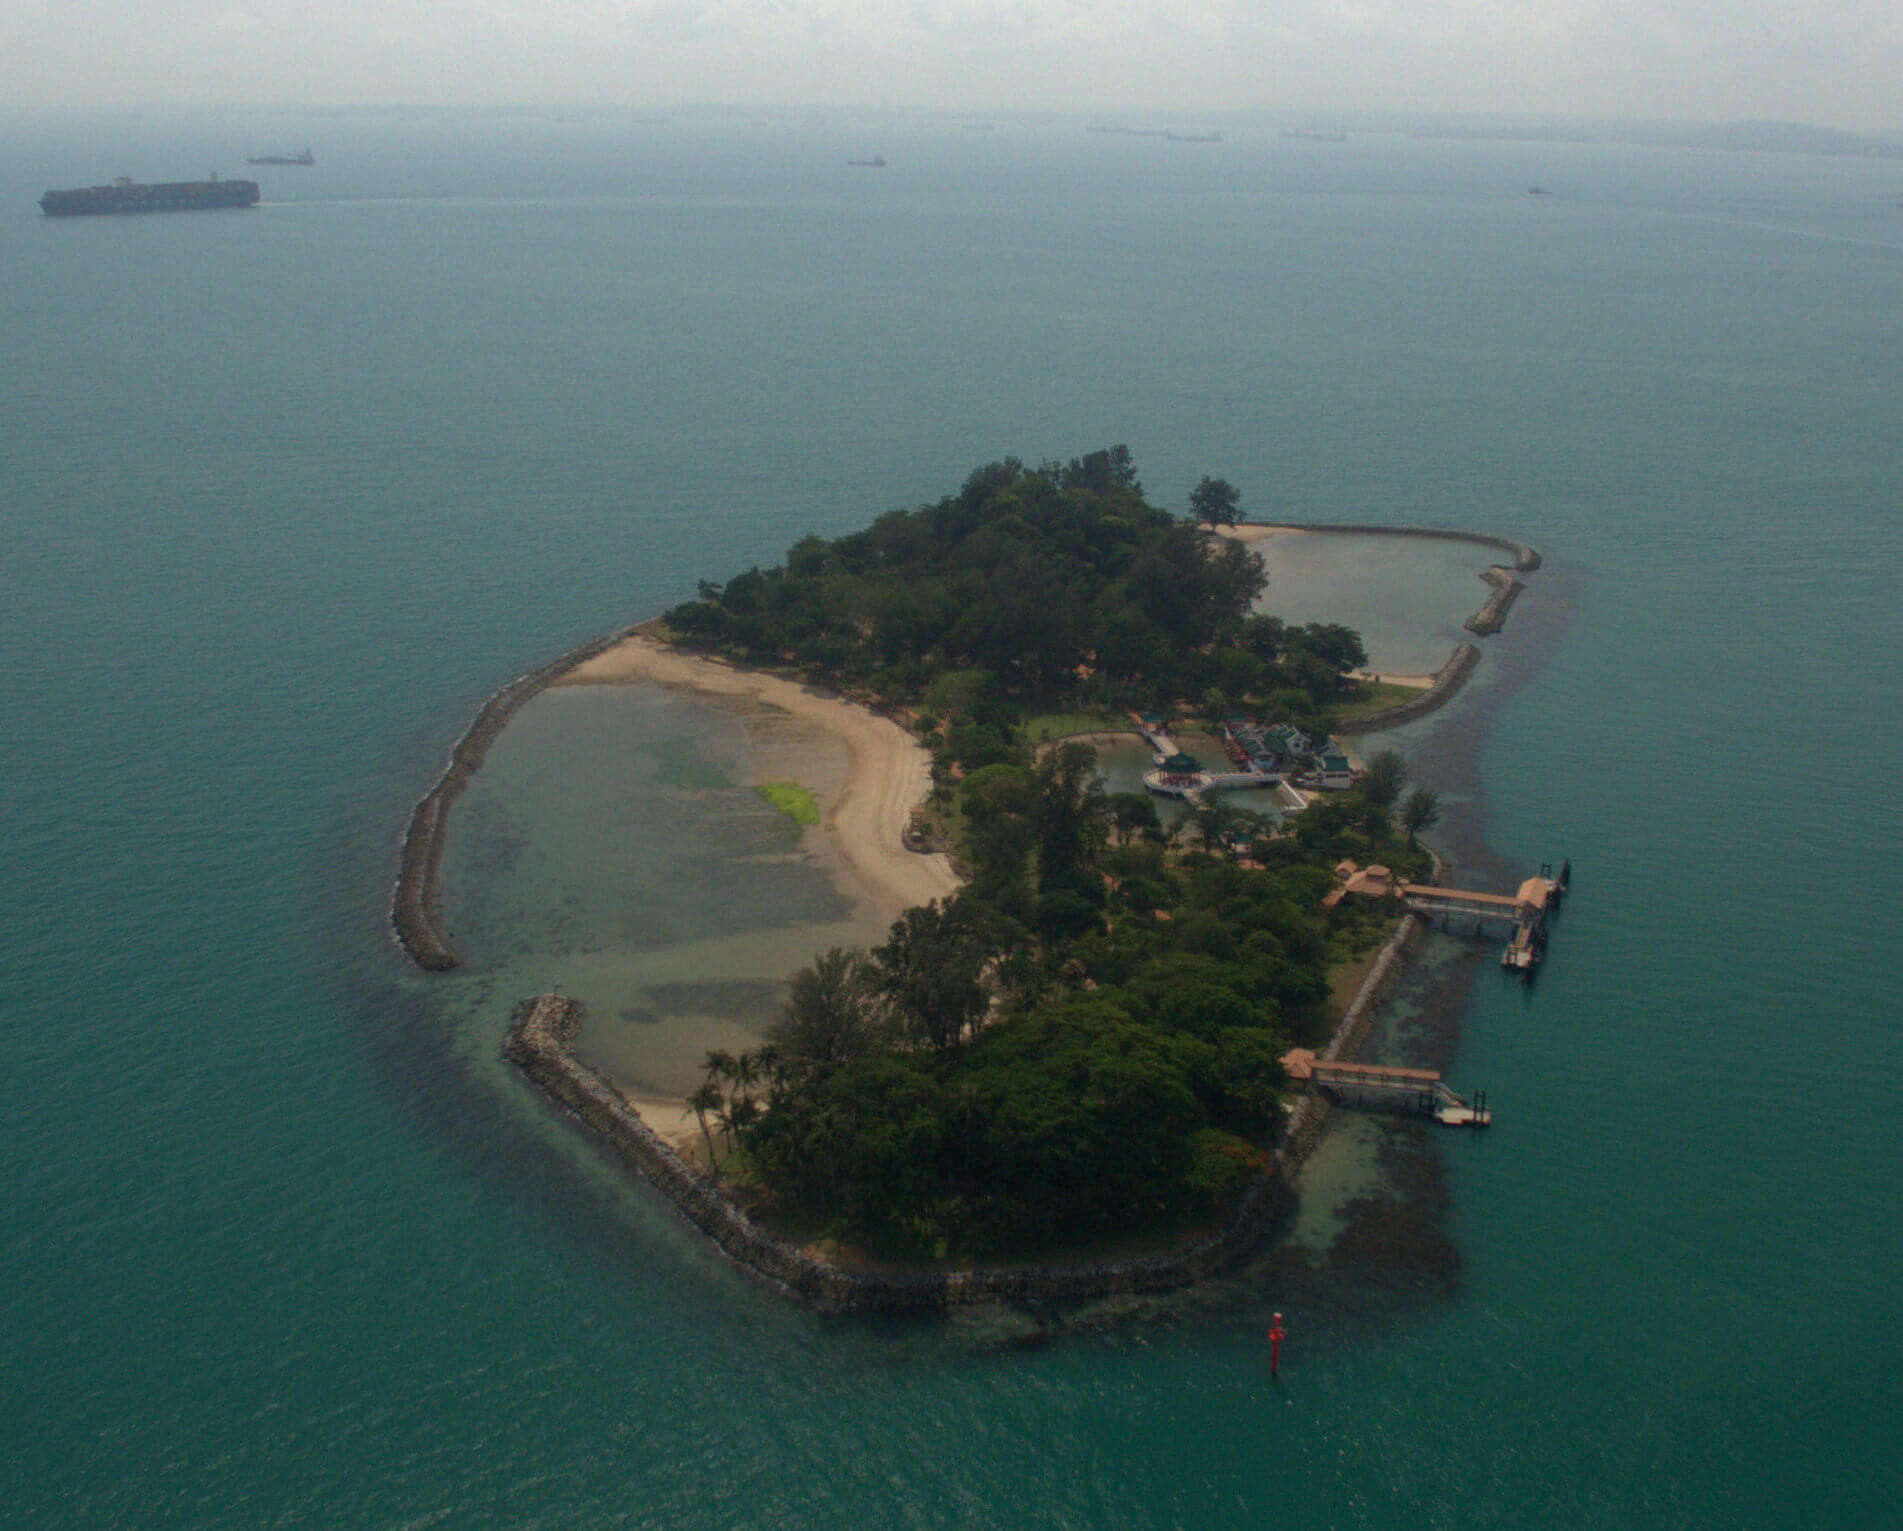 Seletar island